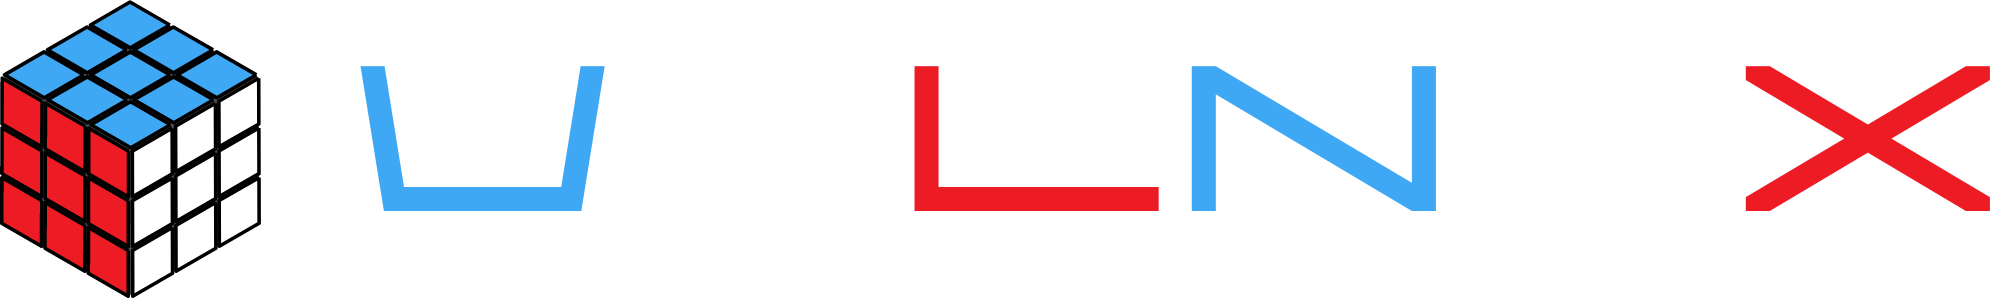 VulNyx website logo